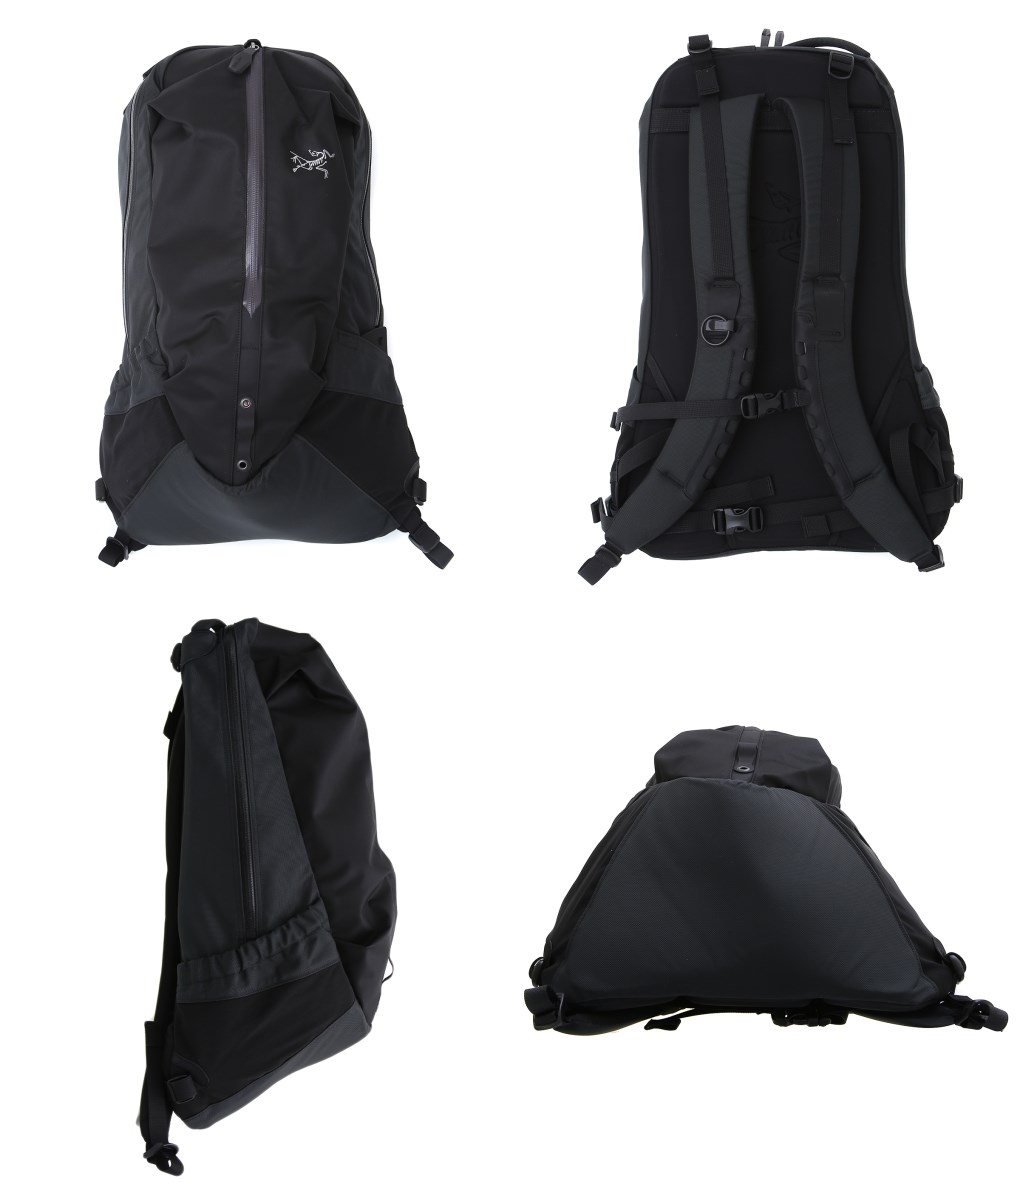 ARC'TERYX / アークテリクス : Arro 22 Backpack-カーボンコップ : アロー 22 バックパック リュック メンズ : L07400400【STD】